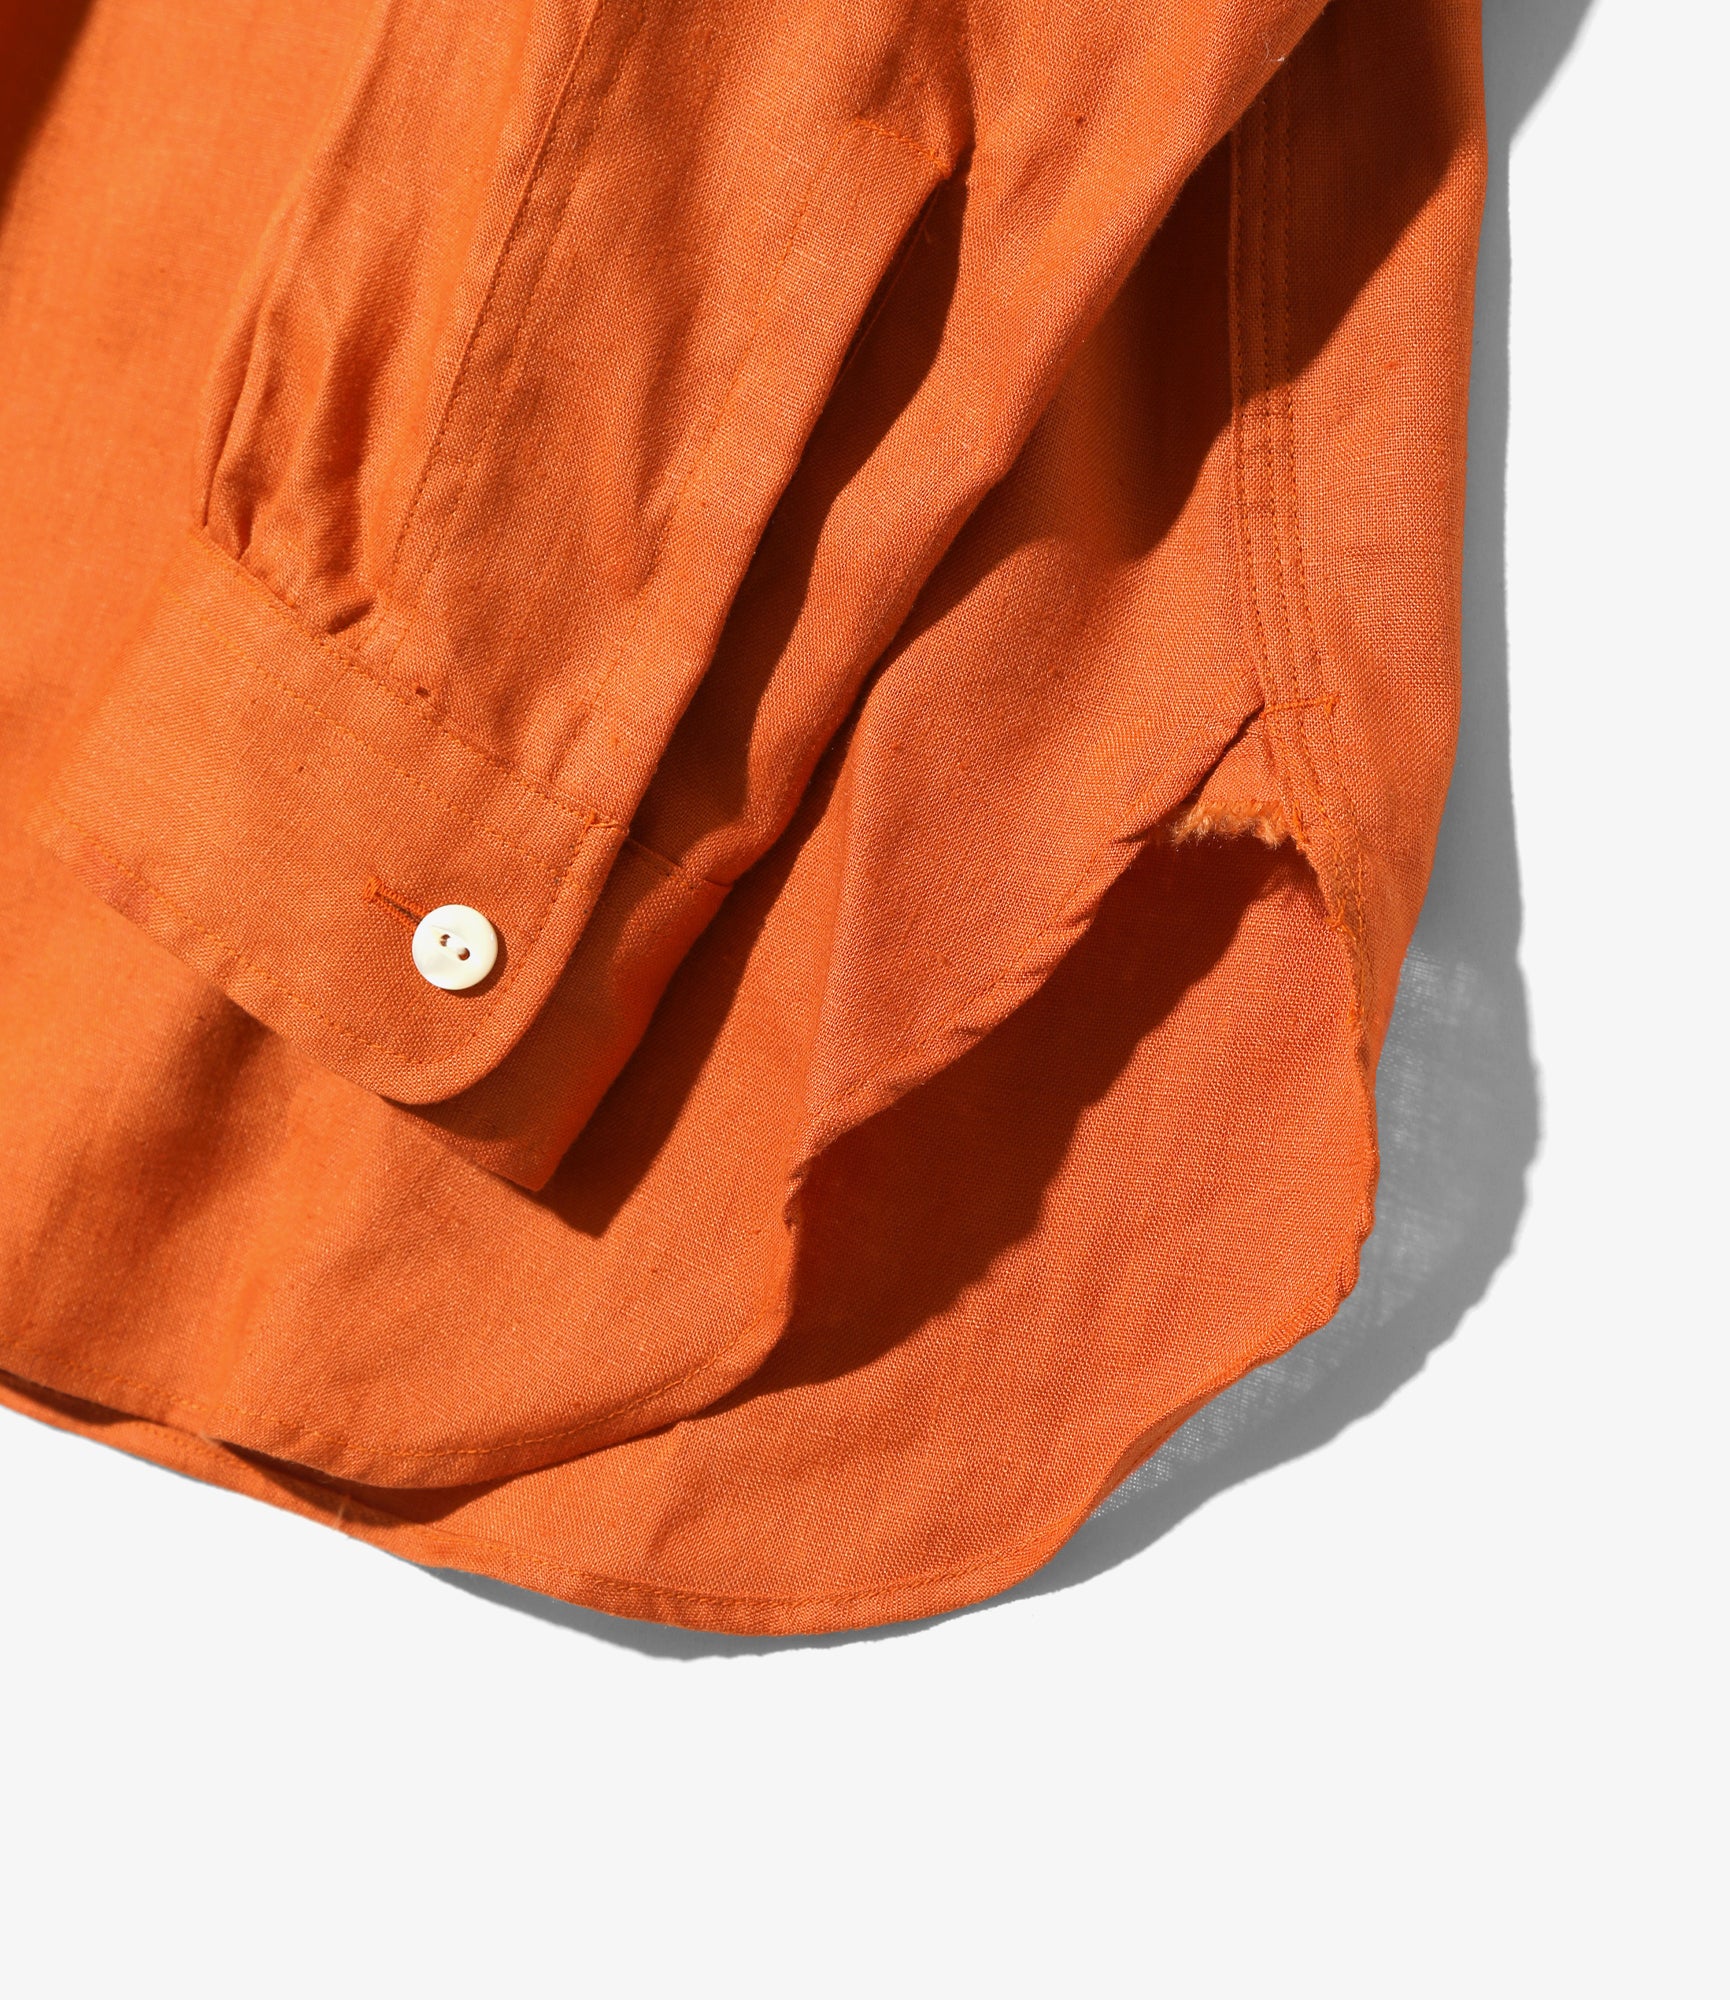 Needles Work Shirt - Linen Canvas - Orange